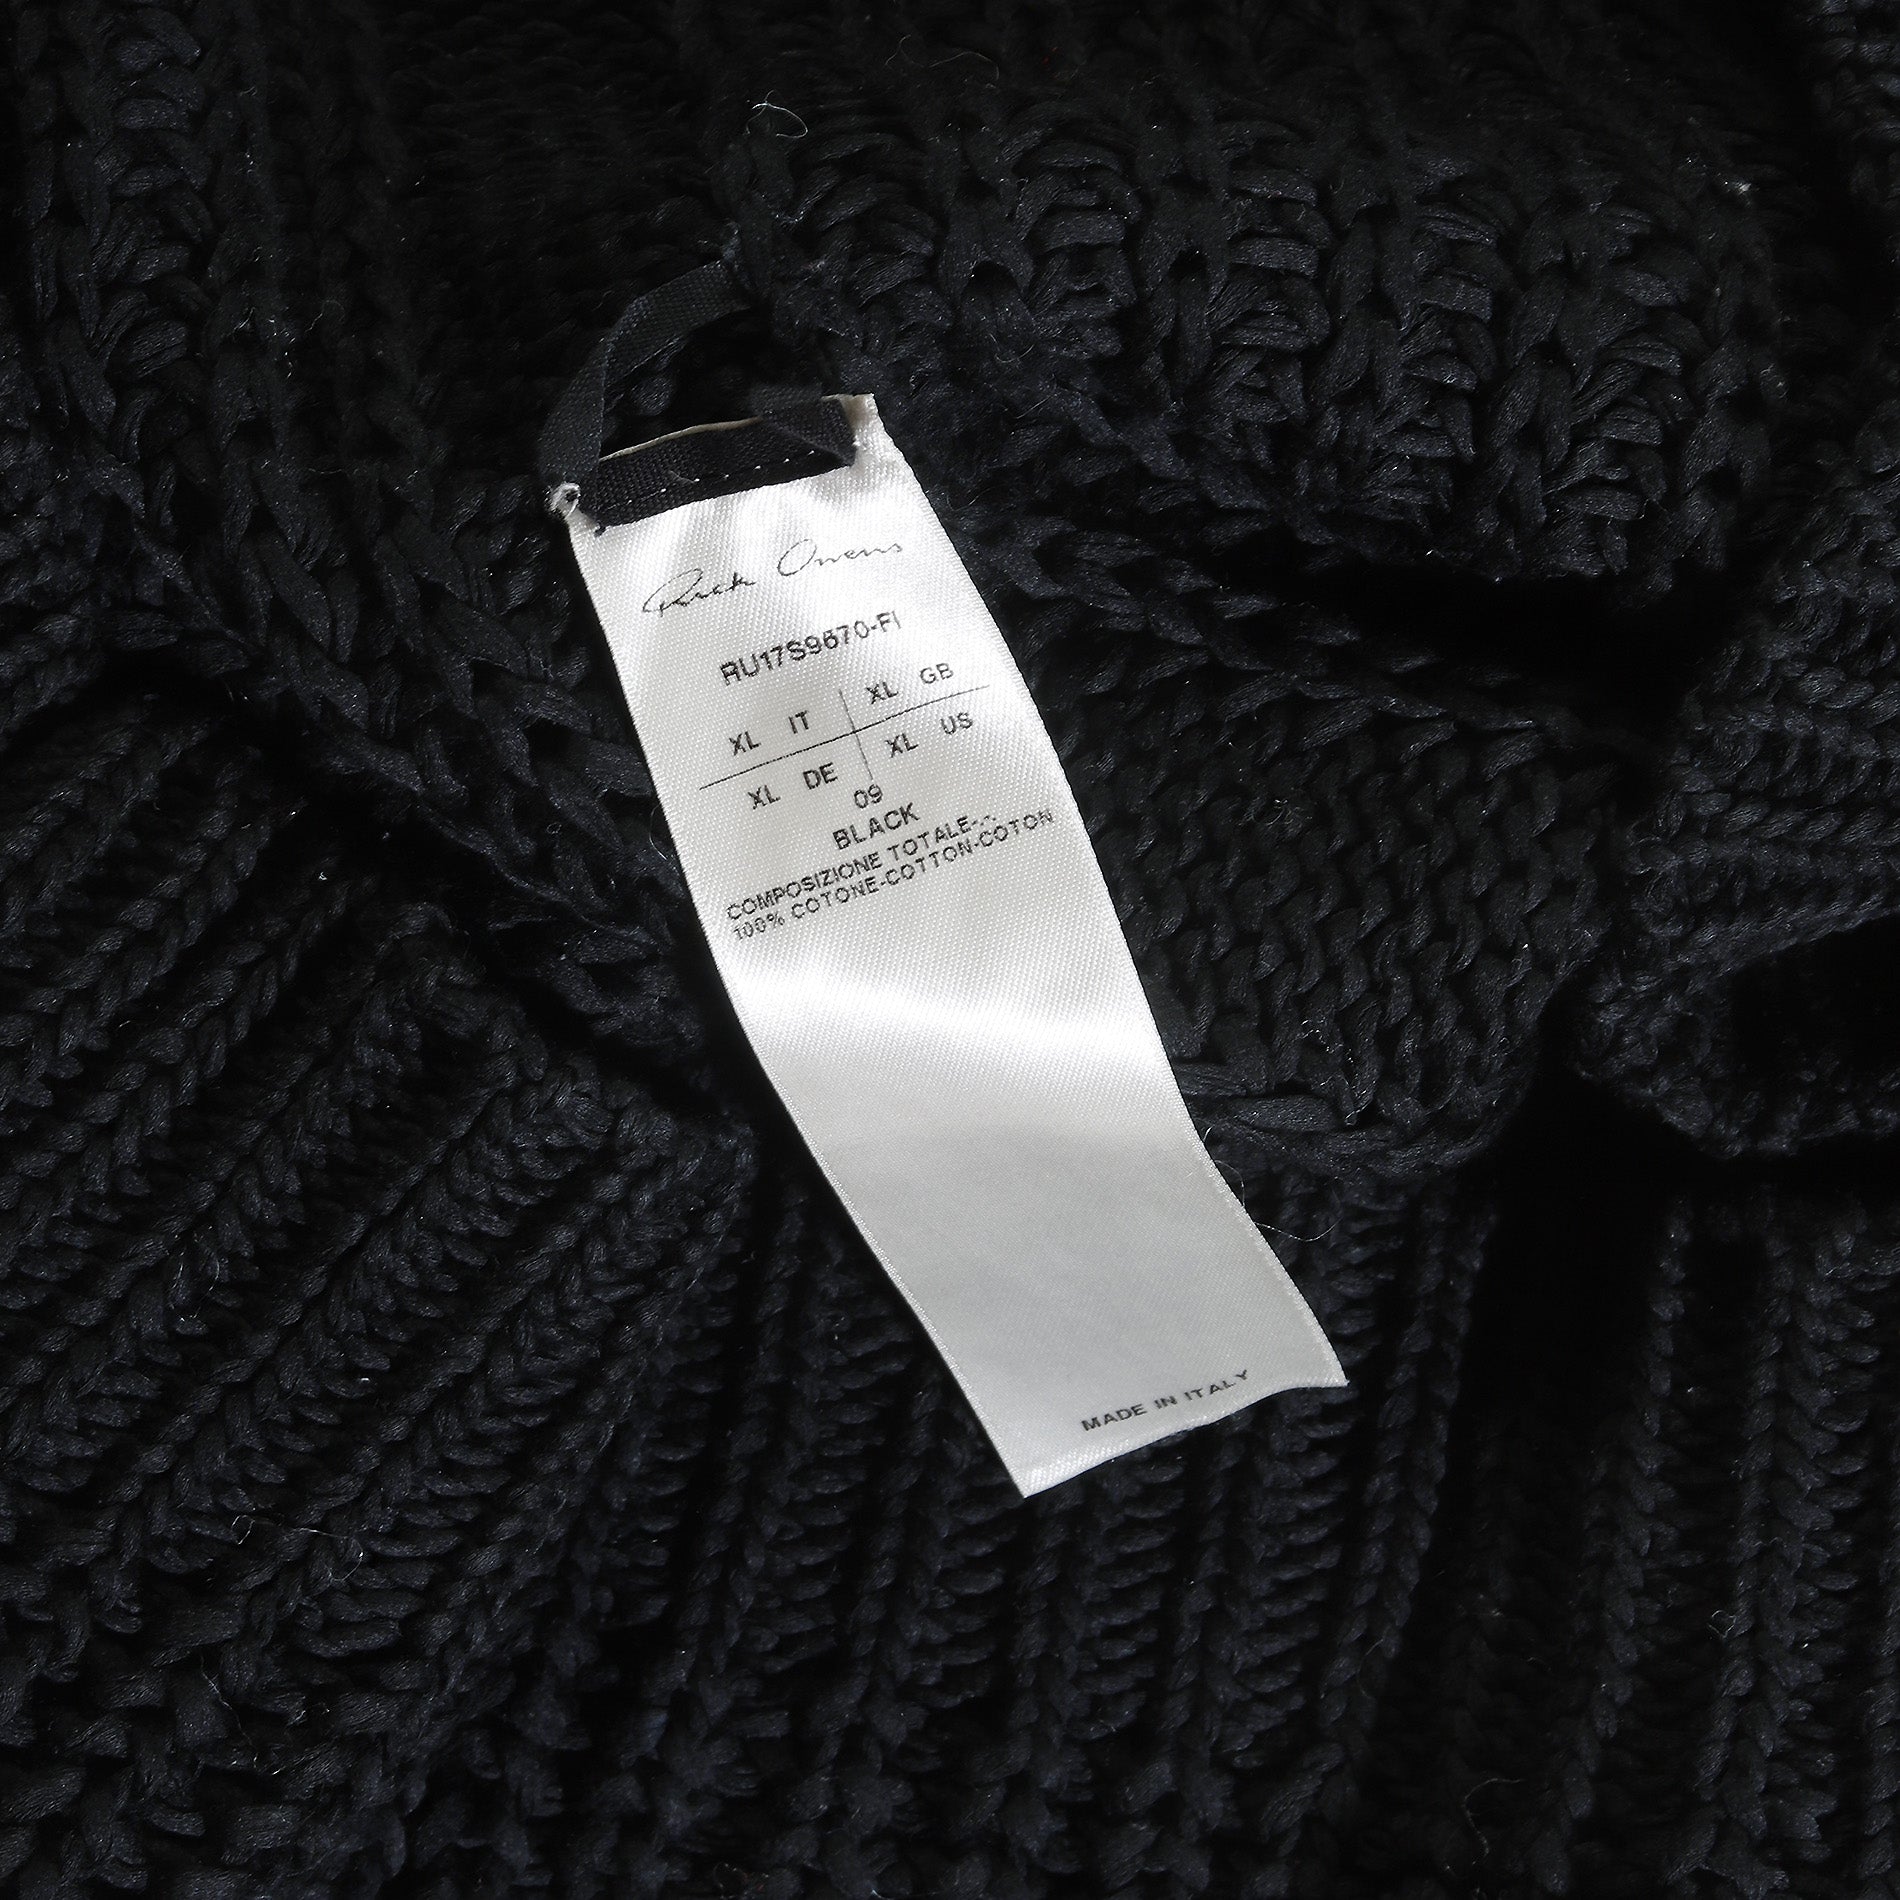 Rick Owens SS17 Black Knit Sweater